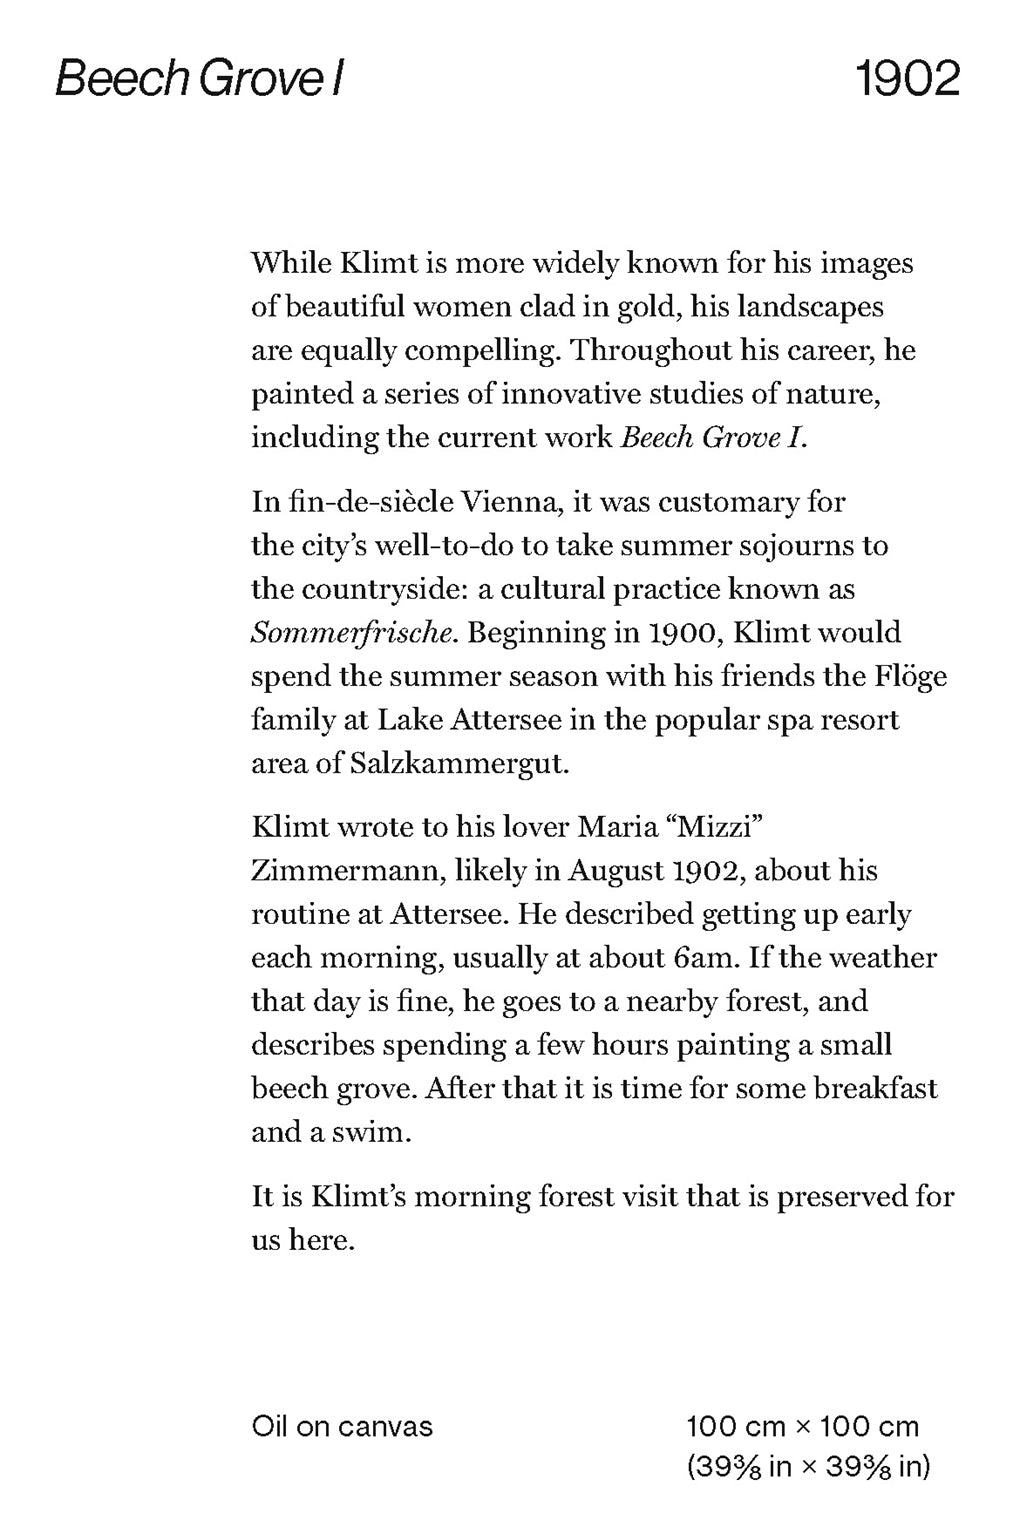 Gustav Klimt: 50 Masterpieces Explored by Sally Grant